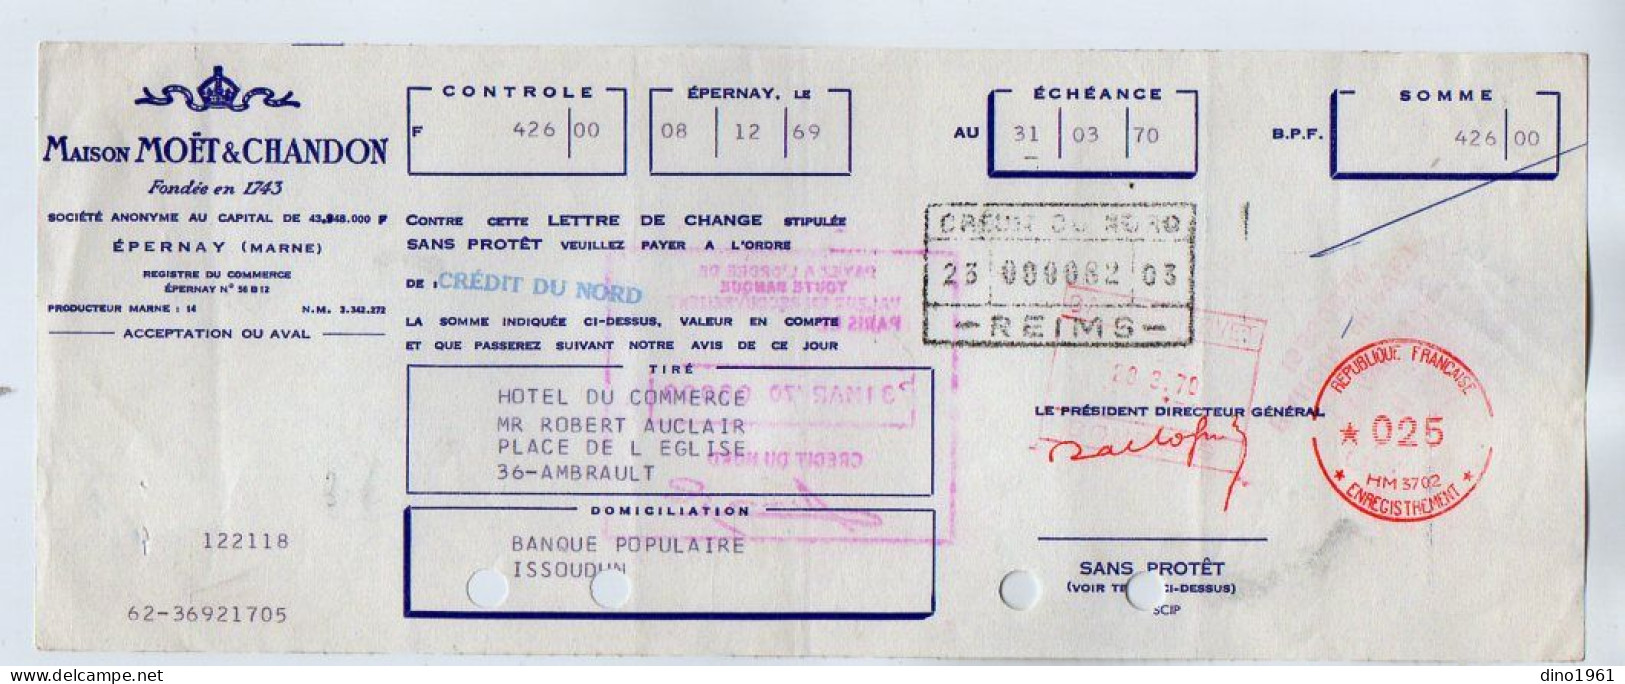 VP22.588 - Lettre De Change - 1969 - Champagne - Maison MOET & CHANDON à EPERNAY ( Marne ) - Bills Of Exchange